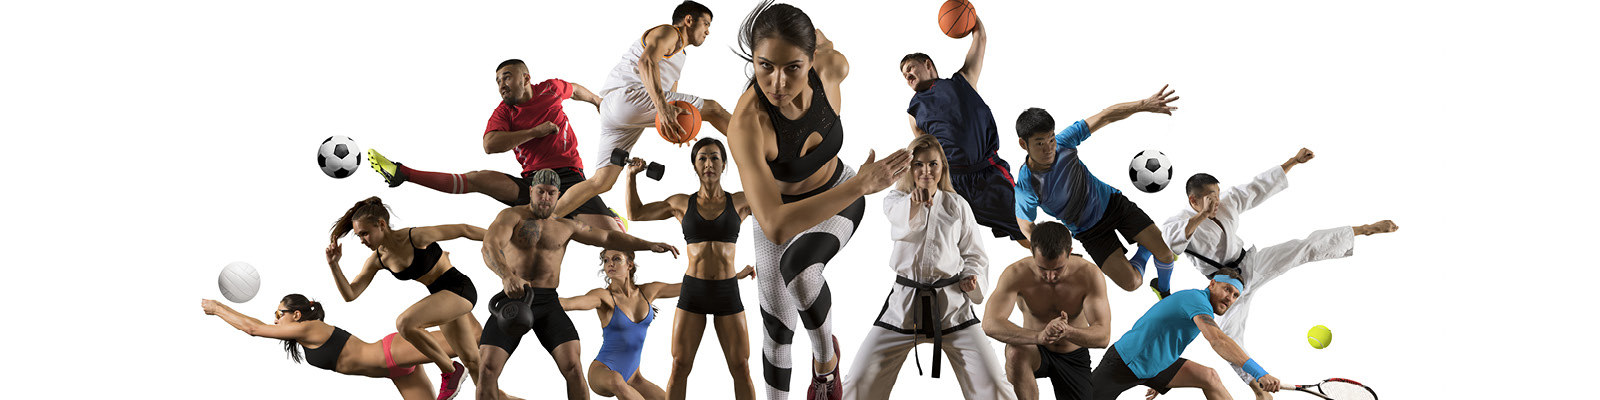 Entrainement sportifs © Adobe Stock